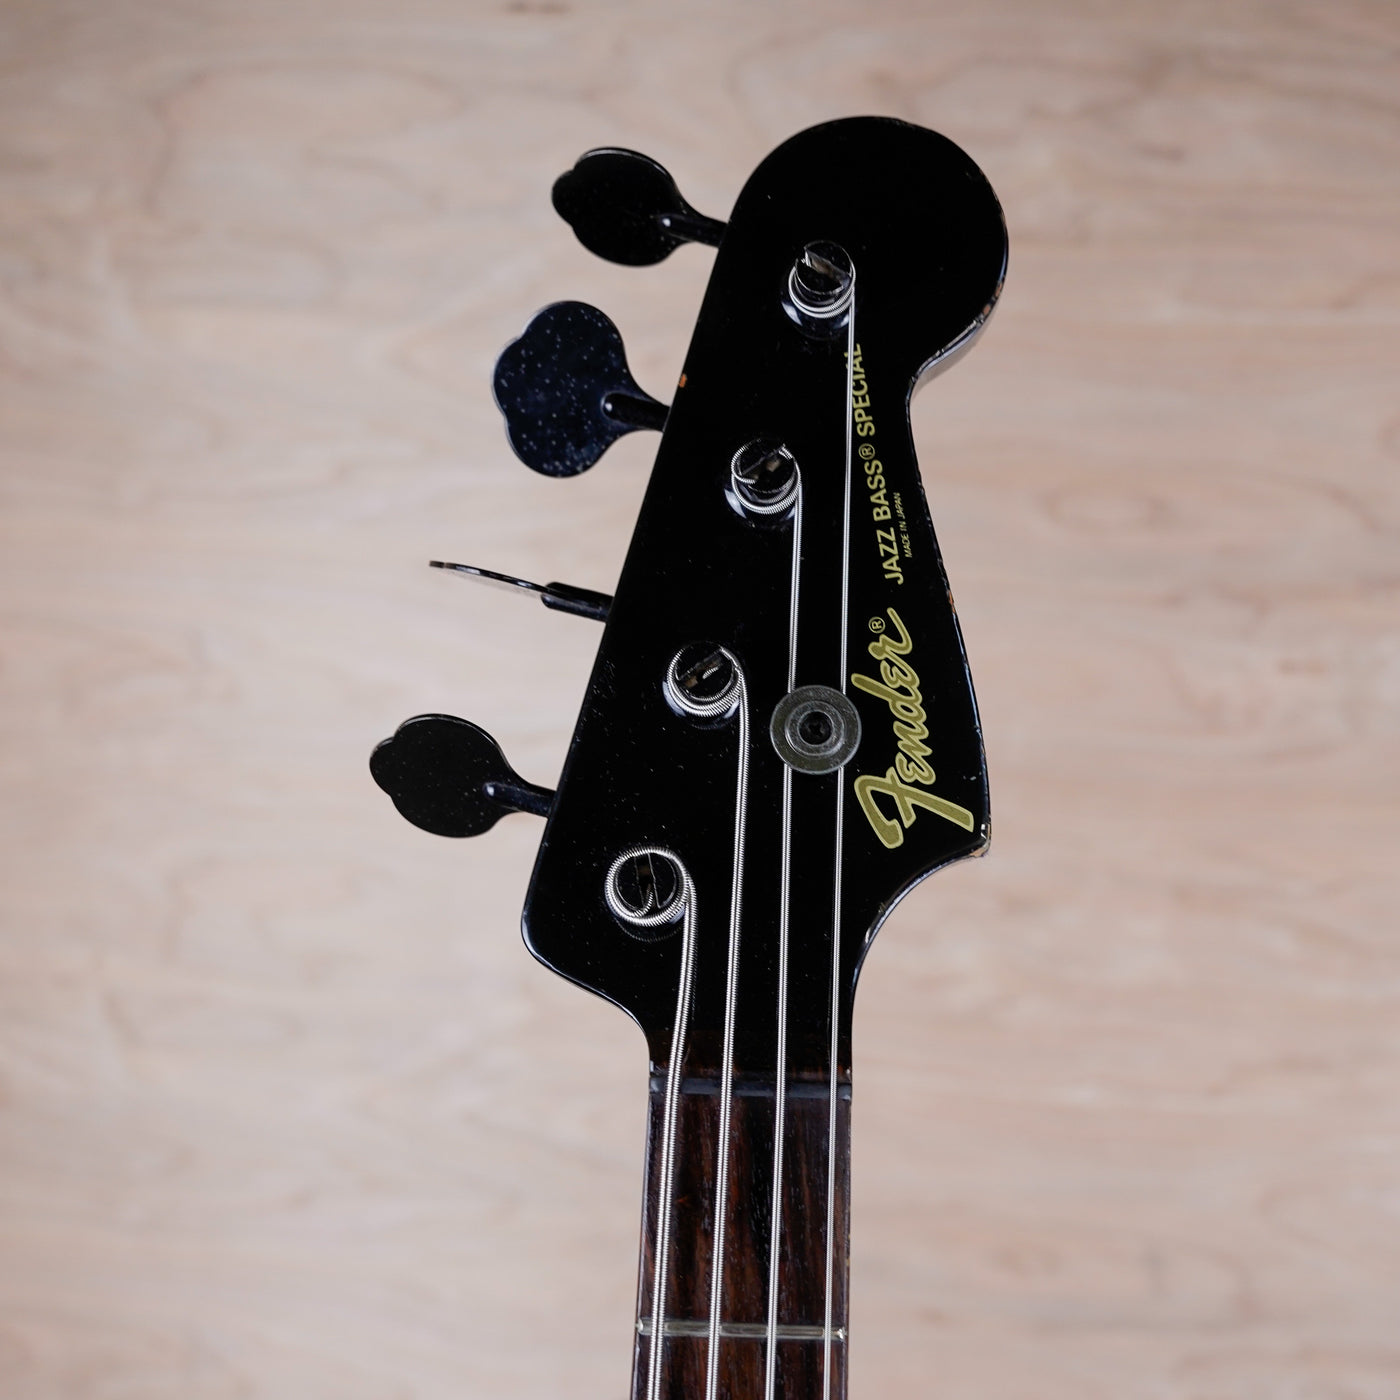 Fender PJ-535 Jazz Bass Special MIJ 1985 Black Made in Japan w/ Bag